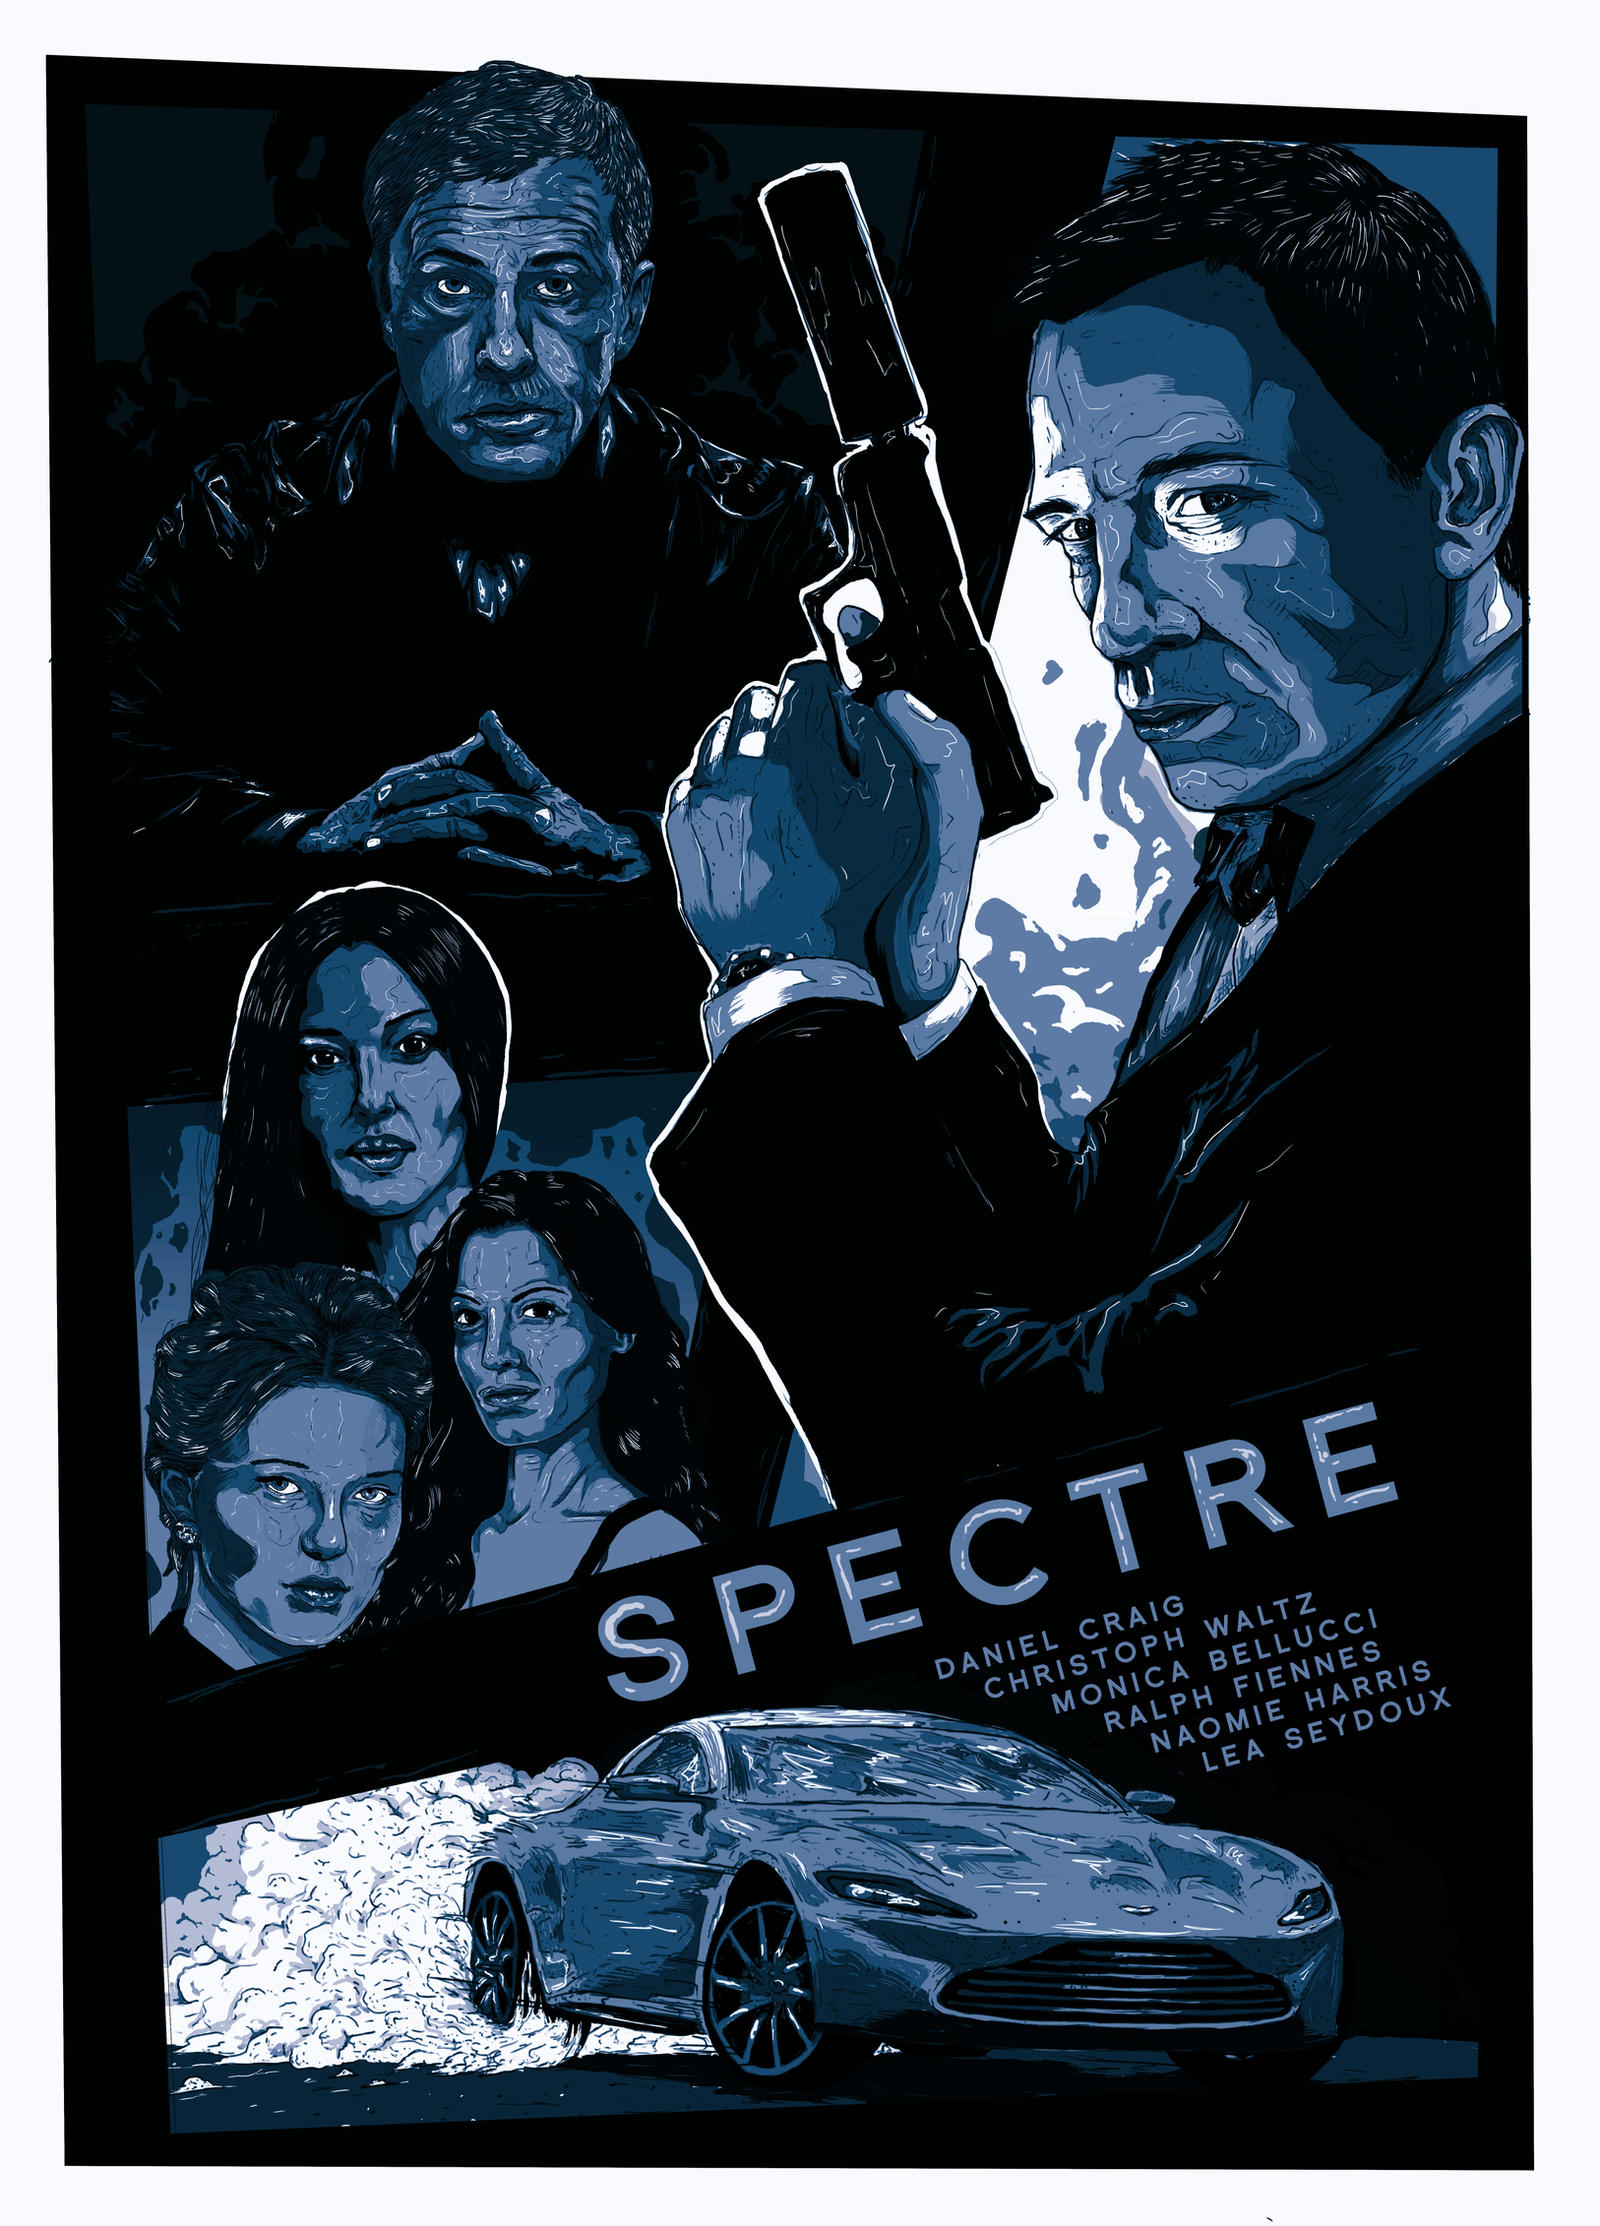 James Bond - Spectre - Alternative Film Poster Art by tmBurt on DeviantArt